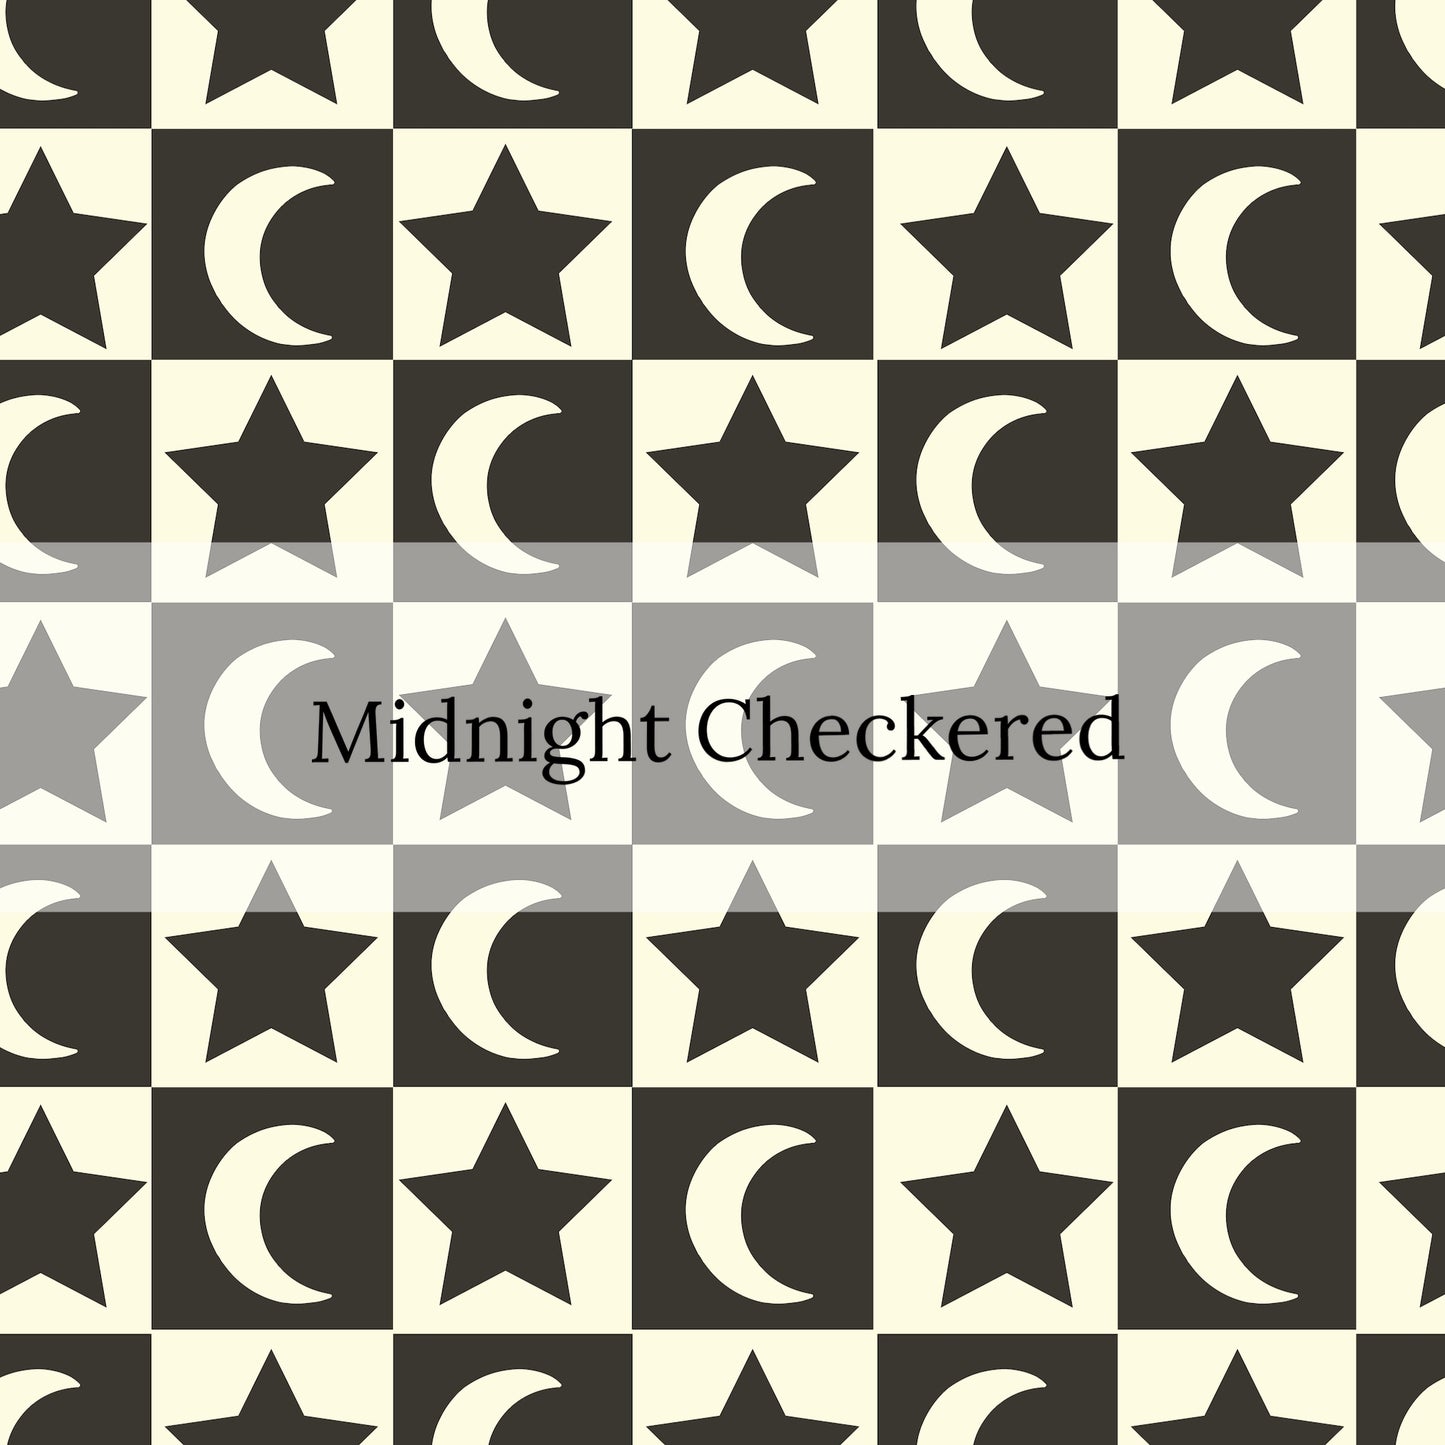 Cream and Black checkered moon and stars